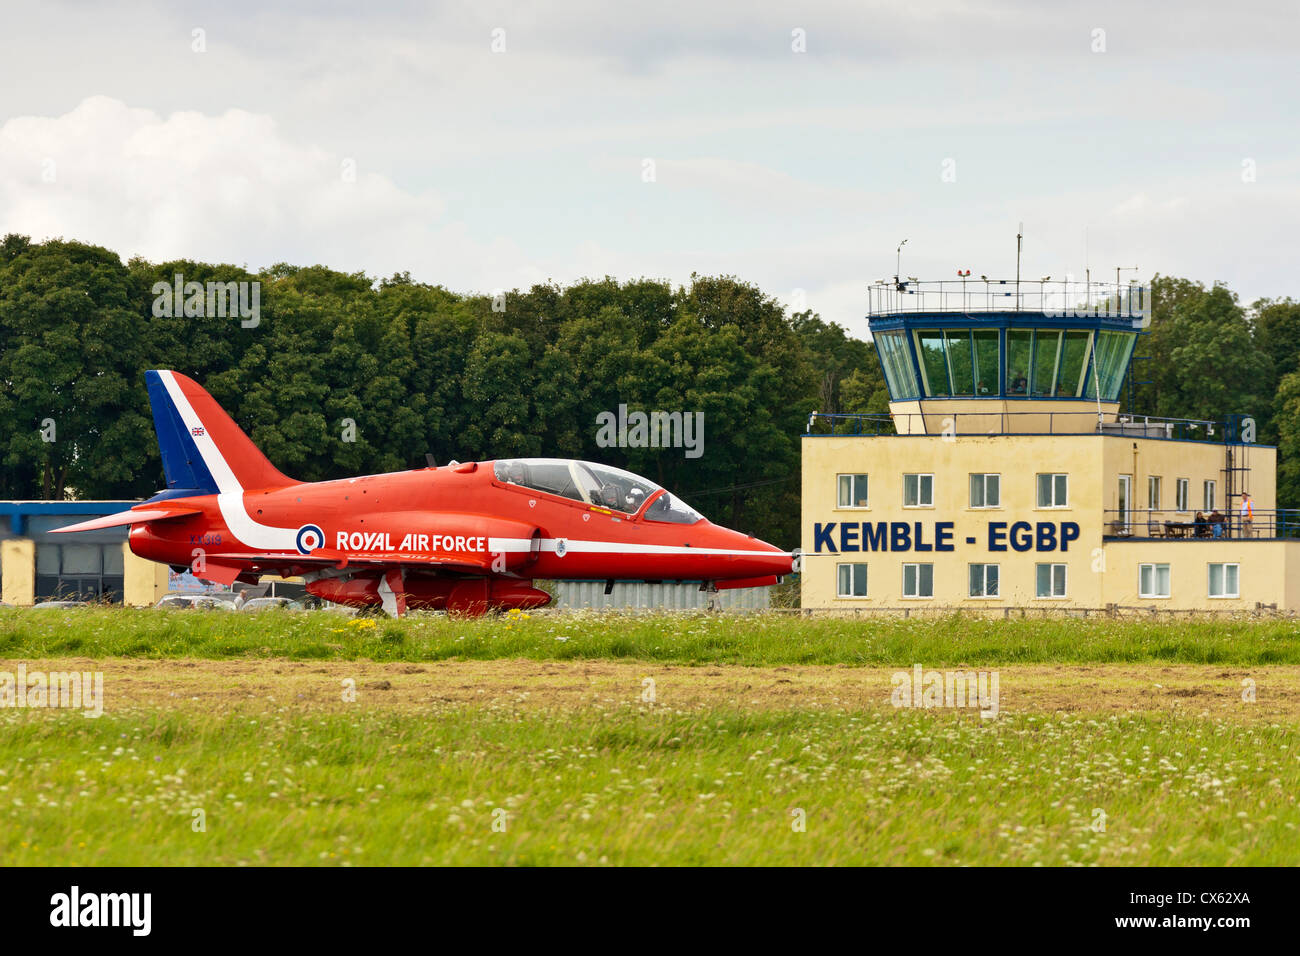 RAF Hawk Red Arrows anzeigen Team Flugzeug auf der Startbahn, vorbei an den Kontrollturm Kemble EGBP JMH6105 Stockfoto